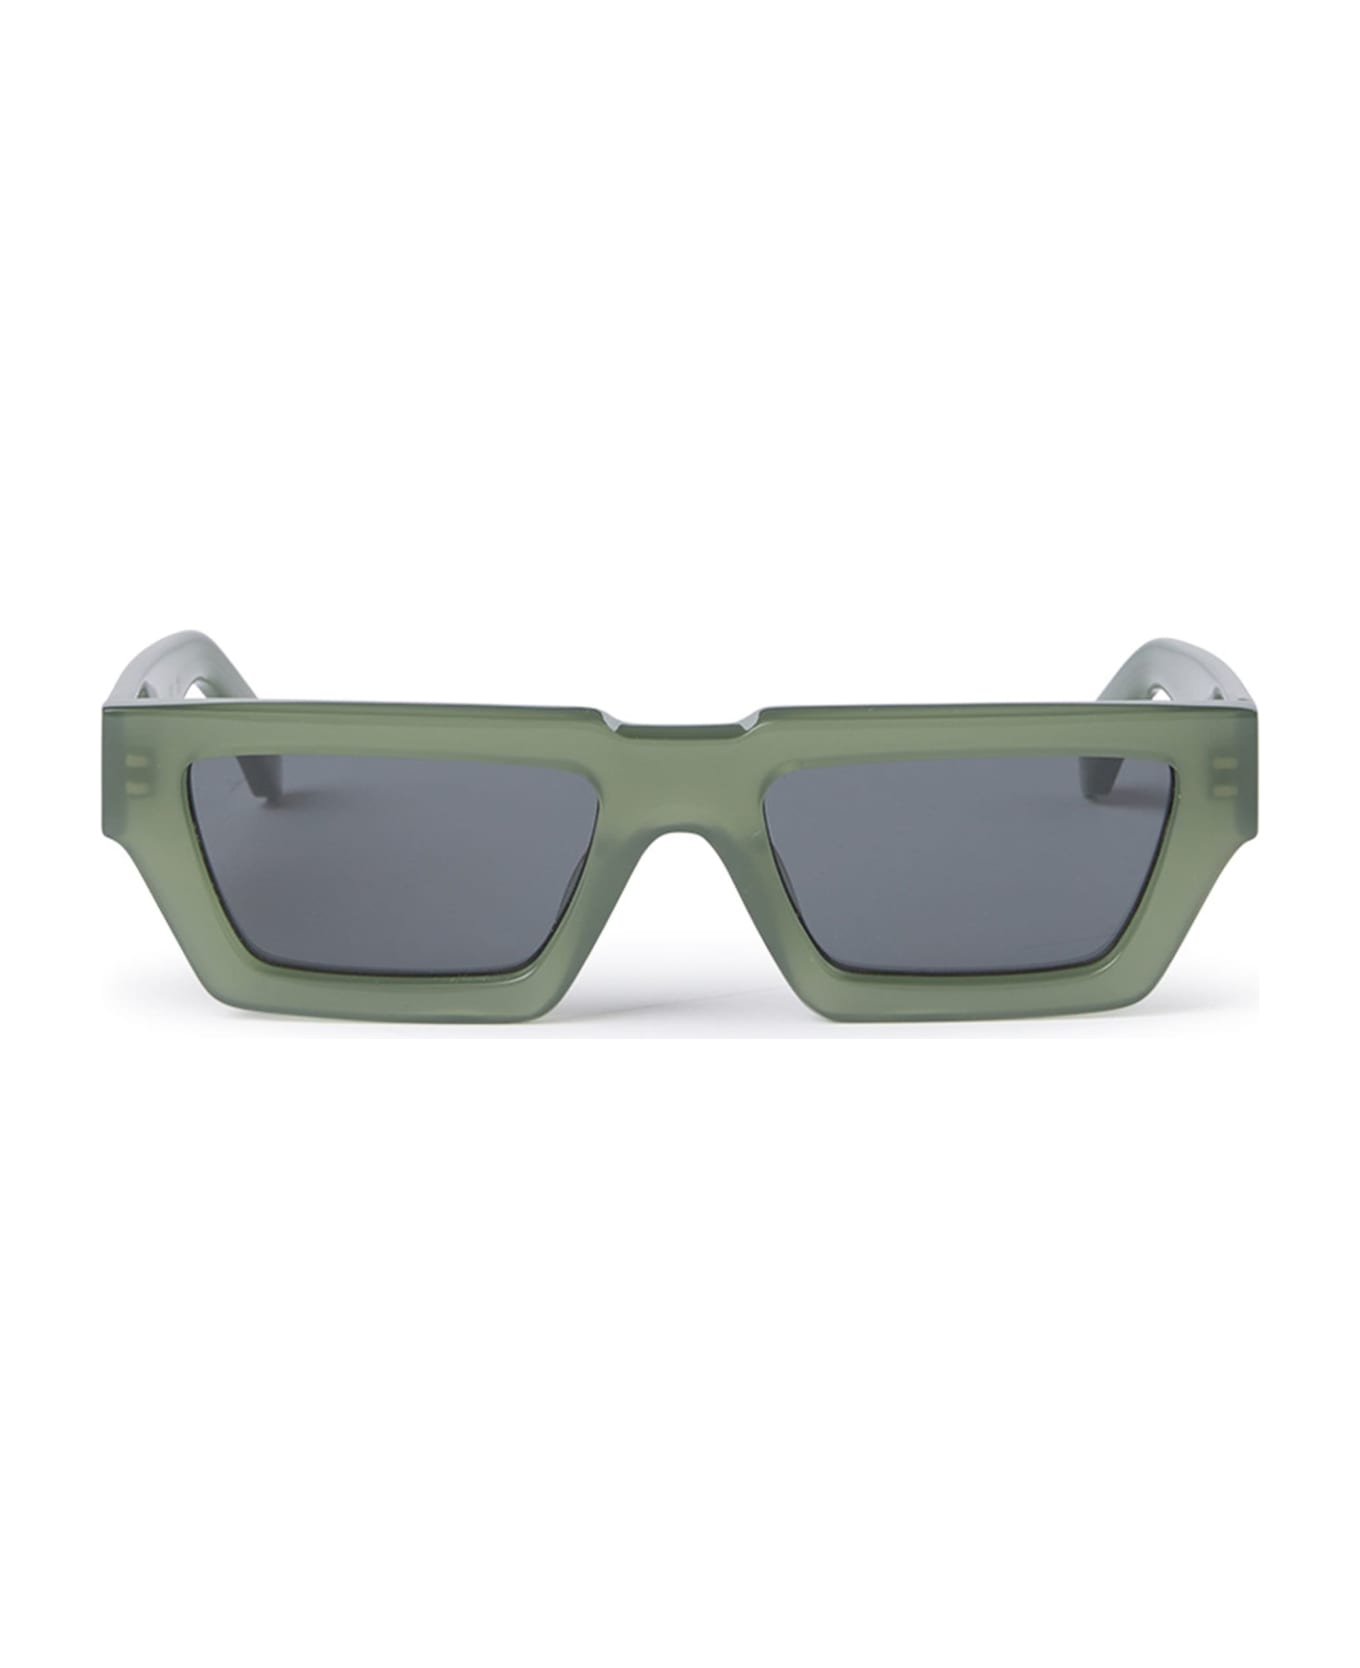 Off-White Manchester - Olive Green / Dark Grey Sunglasses - green サングラス